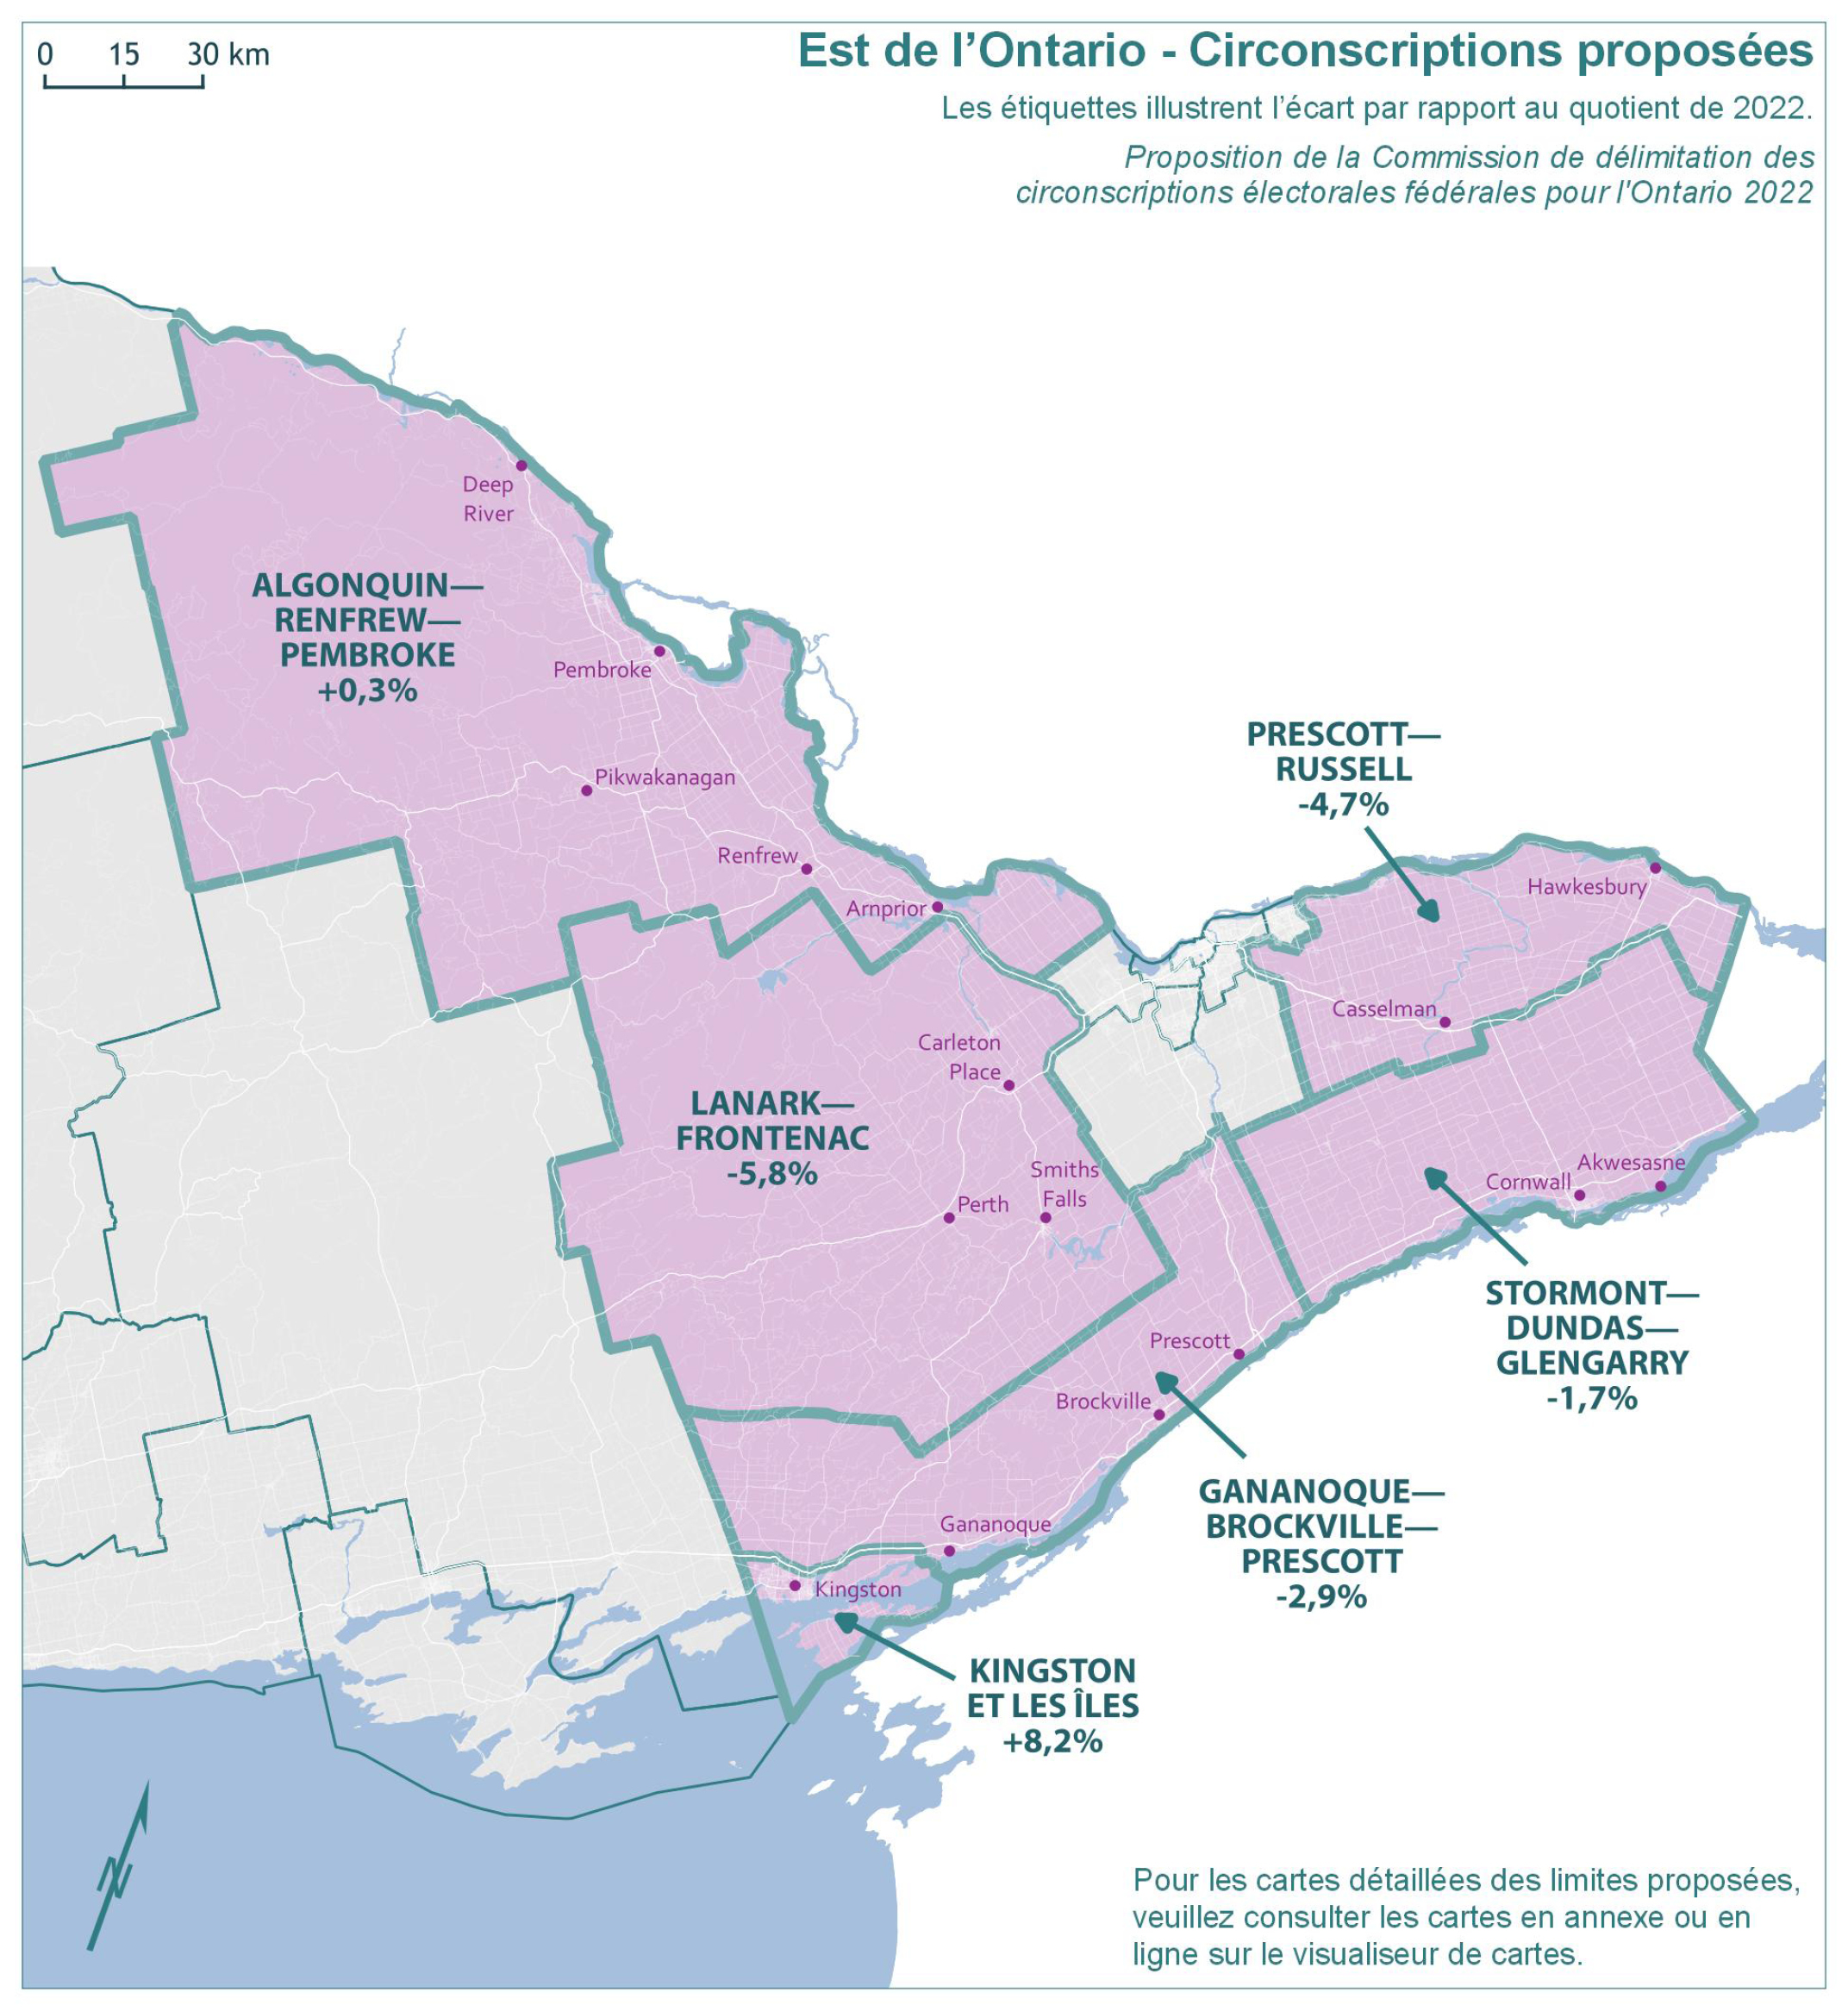 Est de l’Ontario - Circonscriptions proposées 